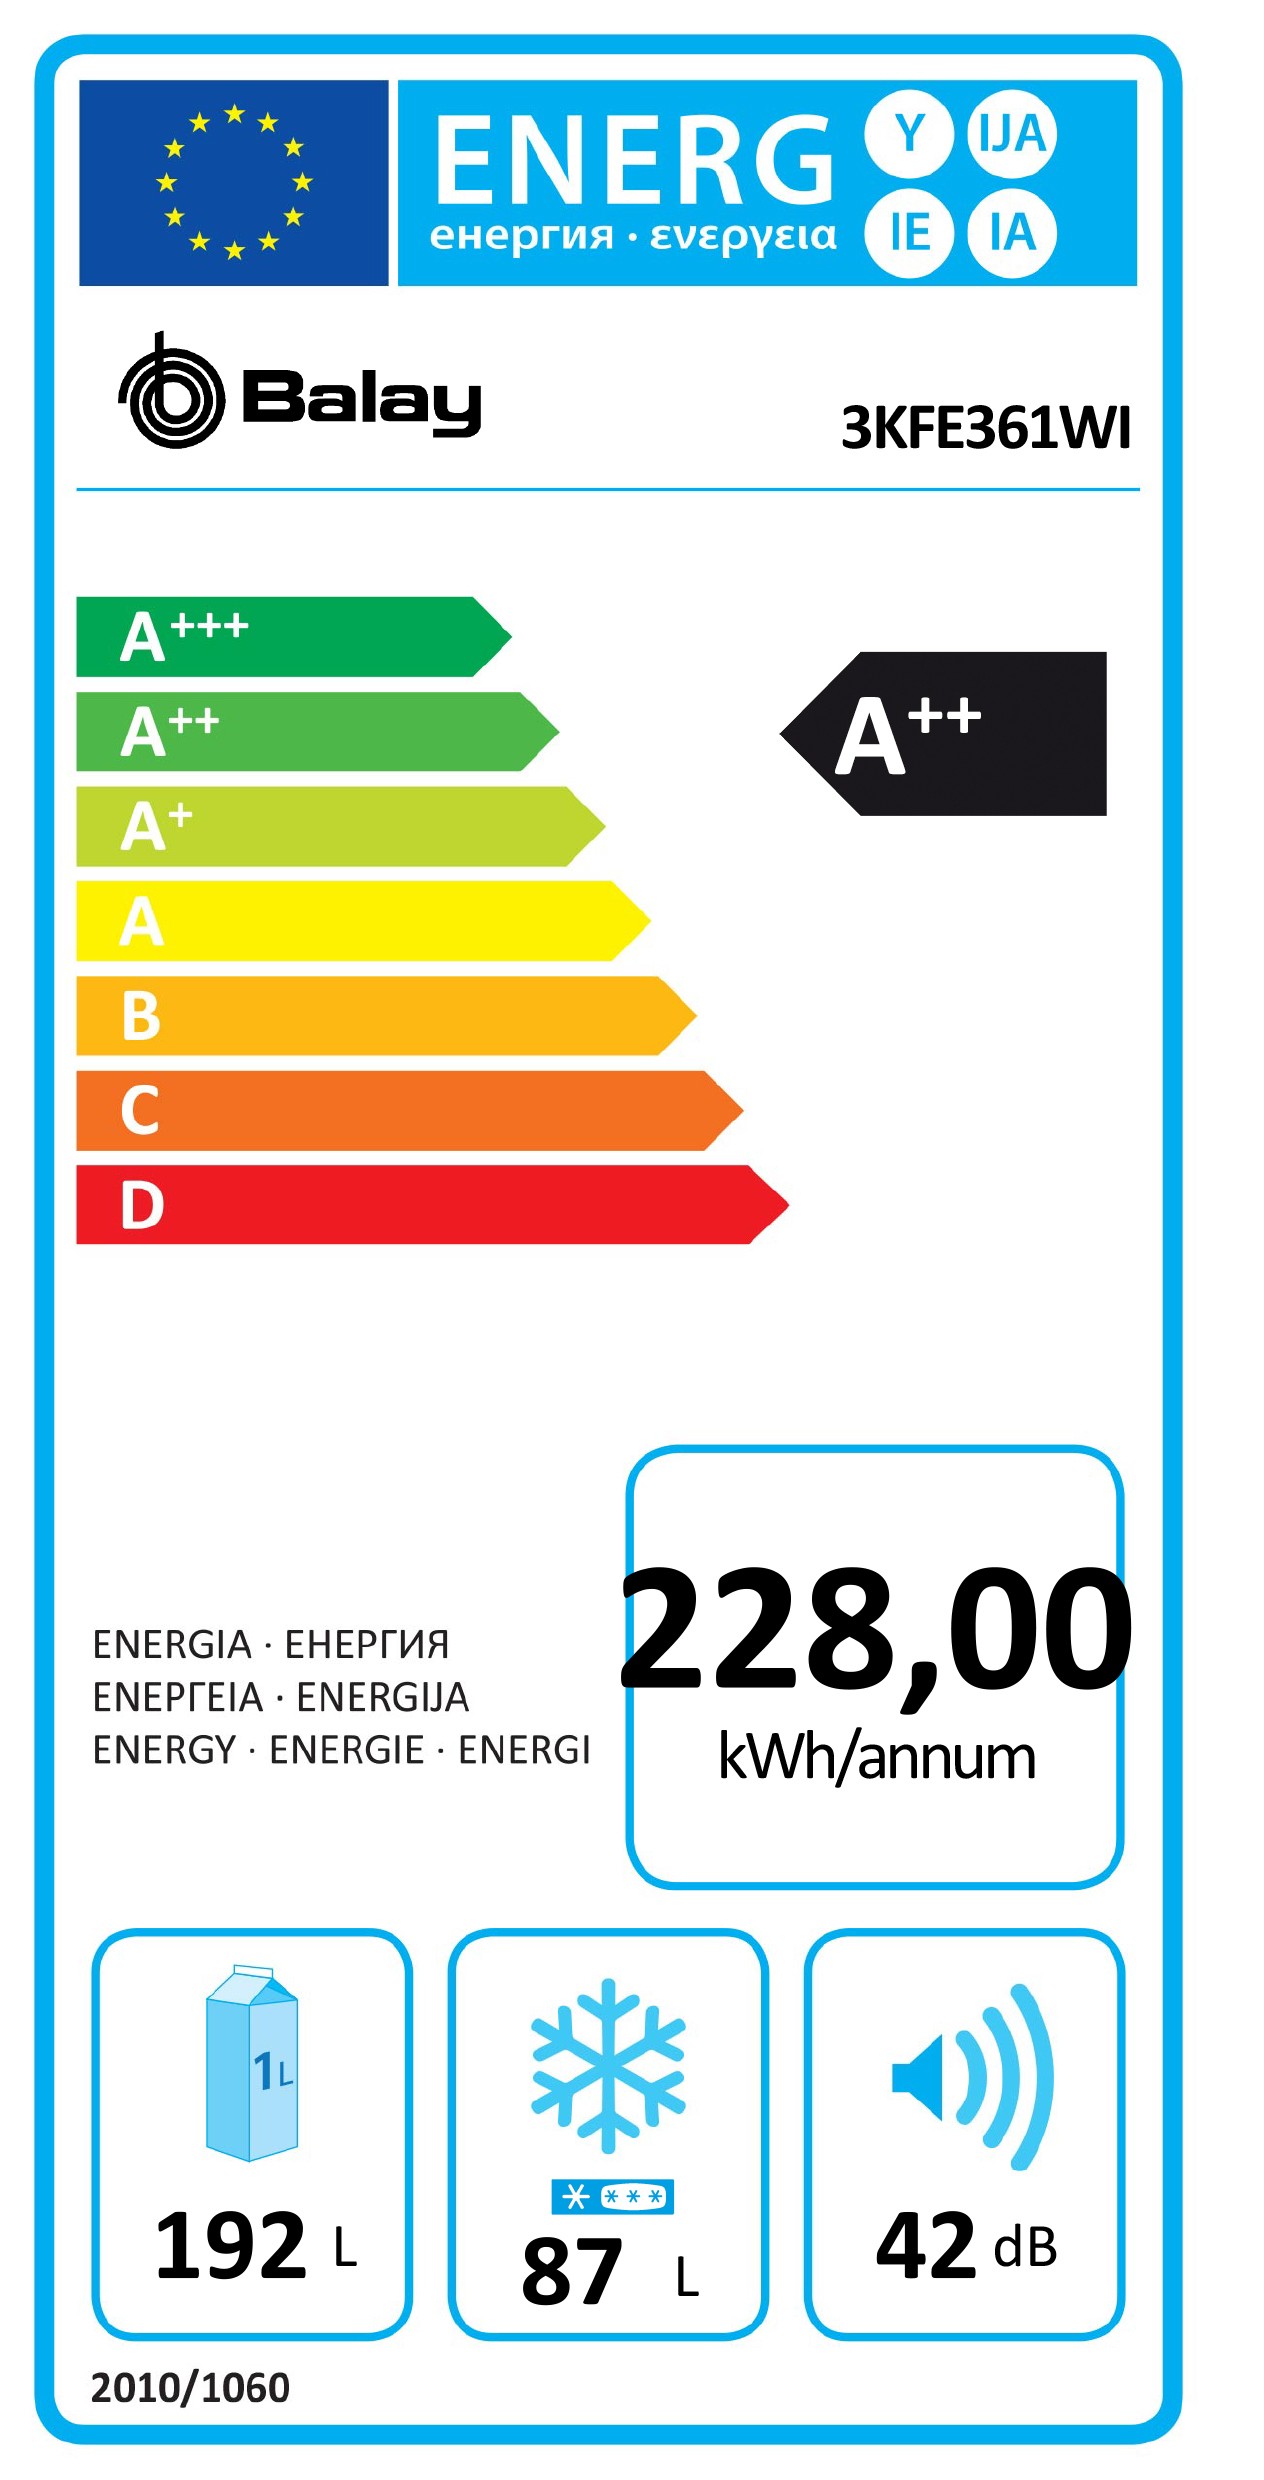 Etiqueta de Eficiencia Energética - 3KFE361WI